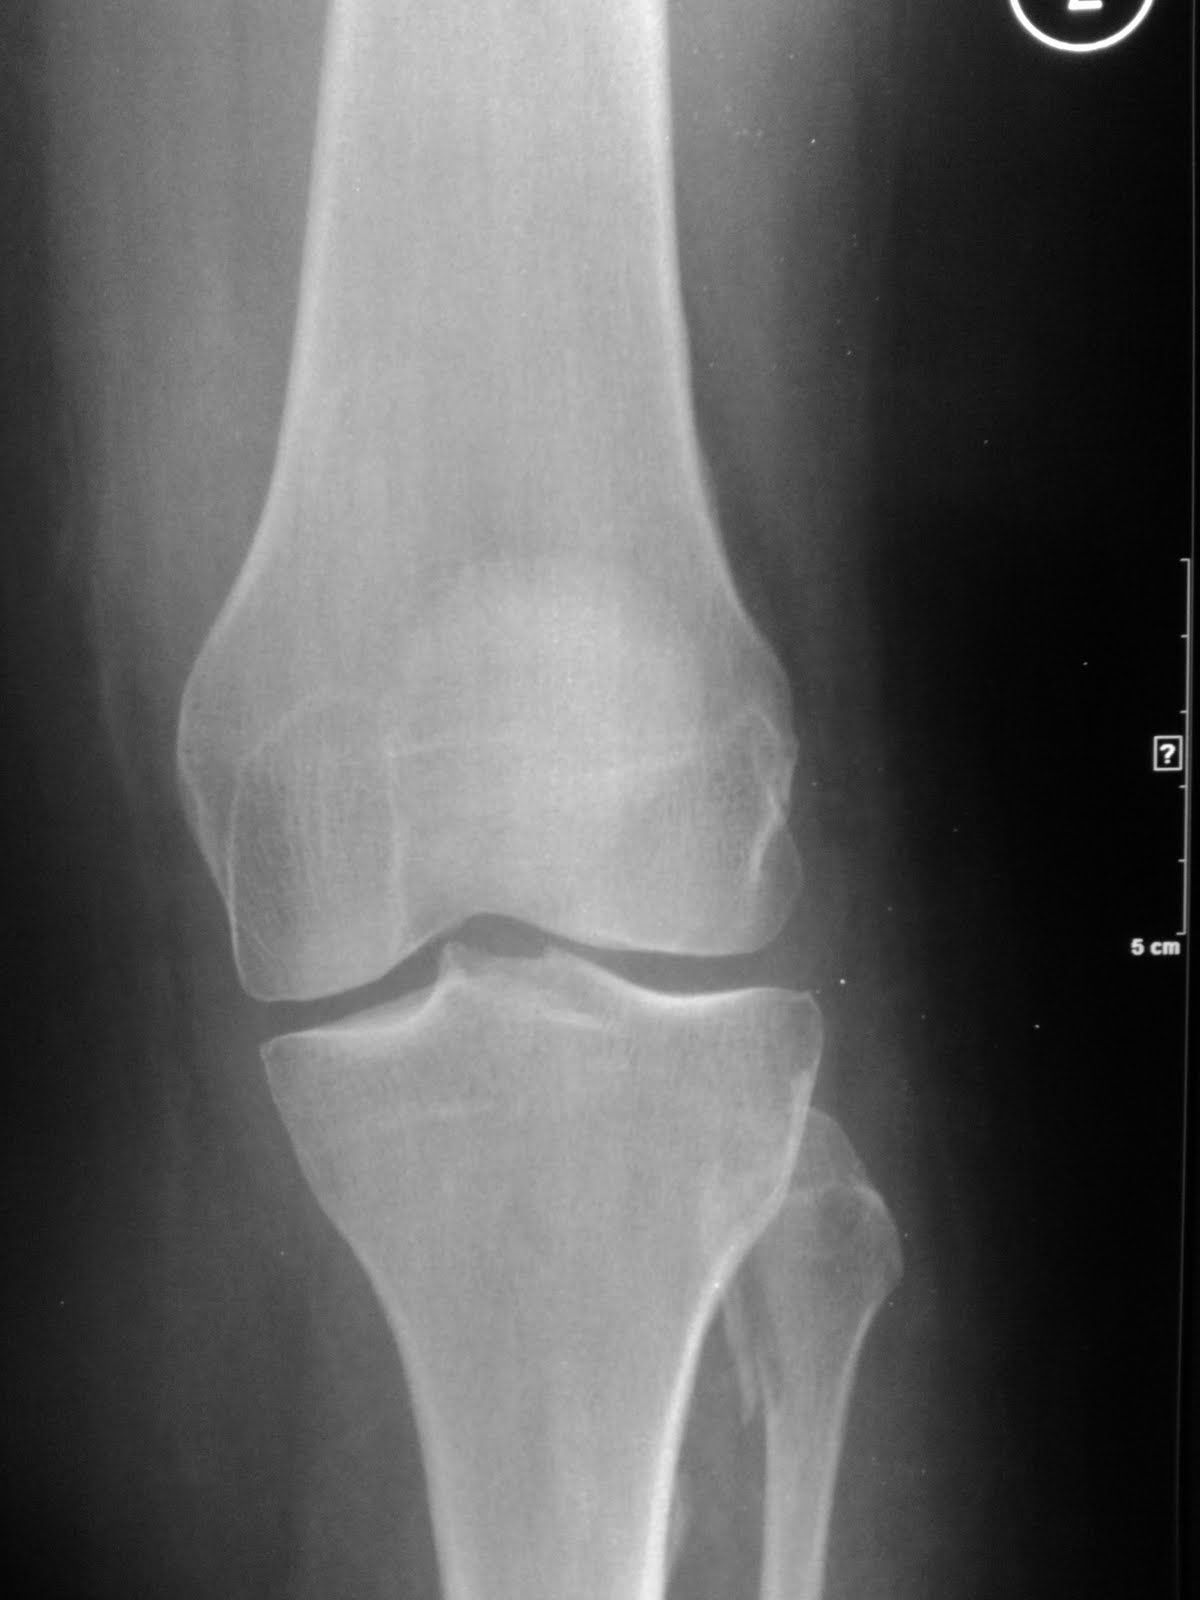 Daily Dose: Fibular fracture